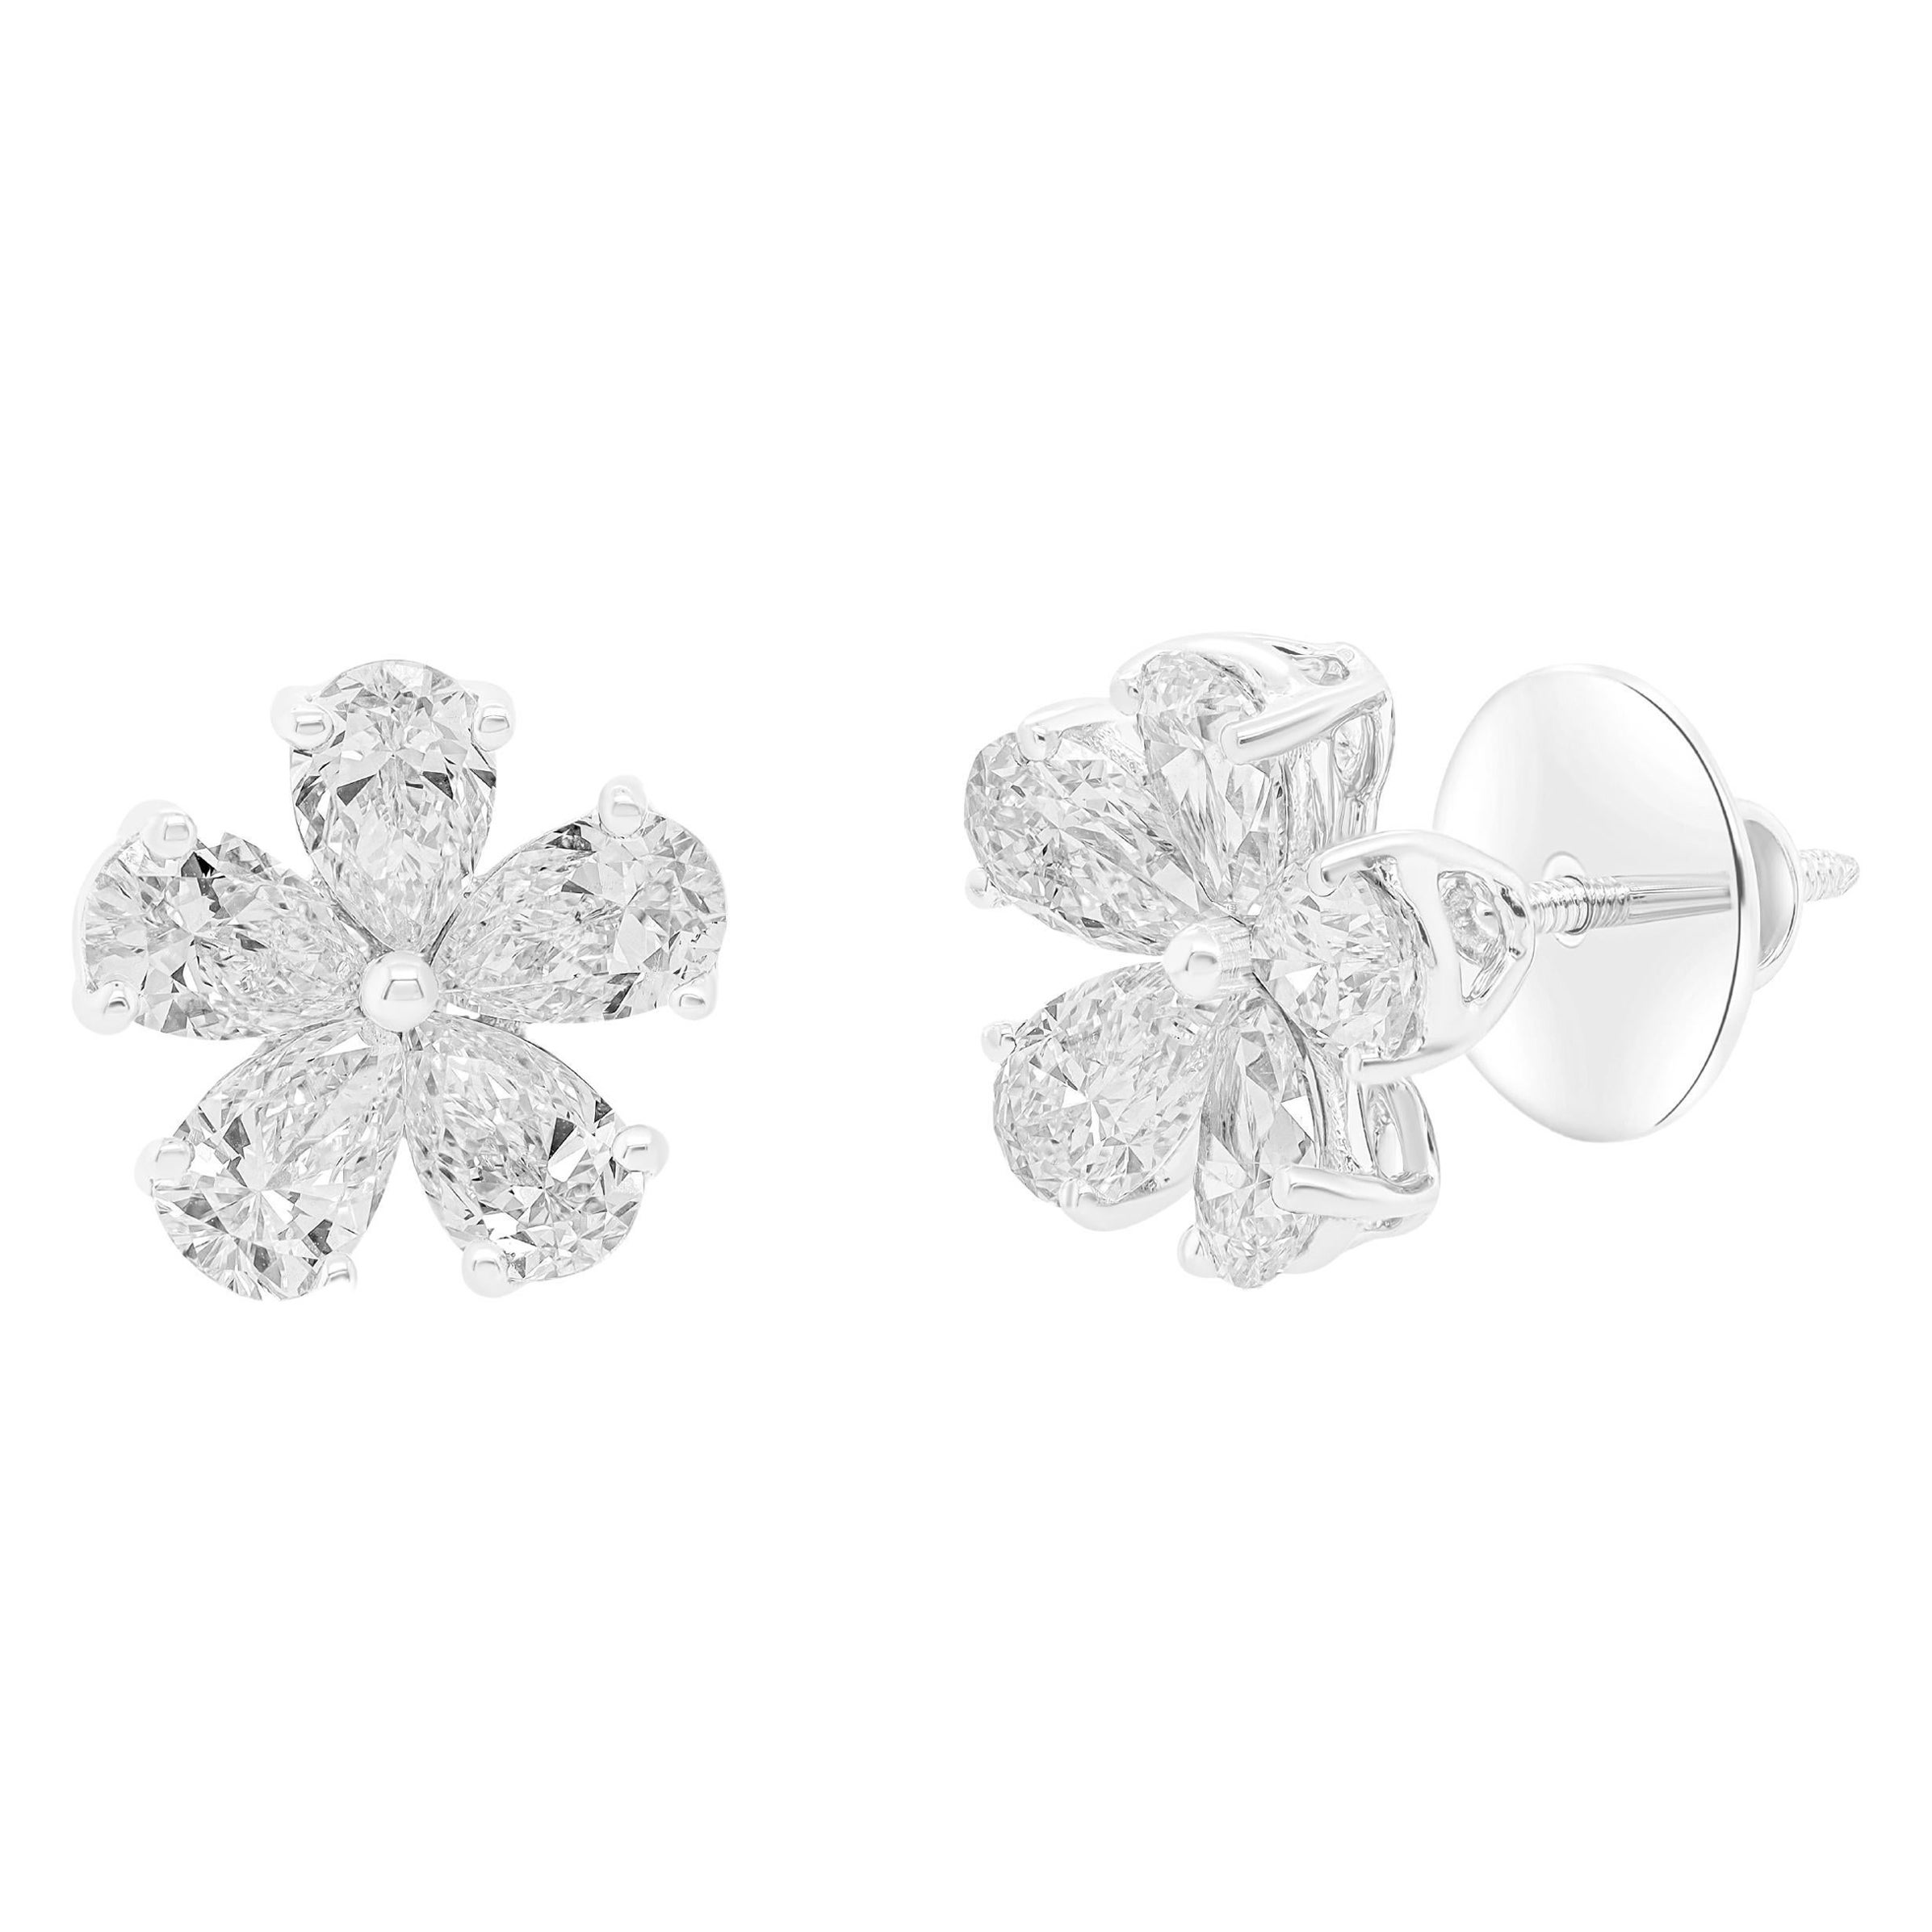 Diana M. 6.05 Carat Flower Cluster Diamond Earrings For Sale